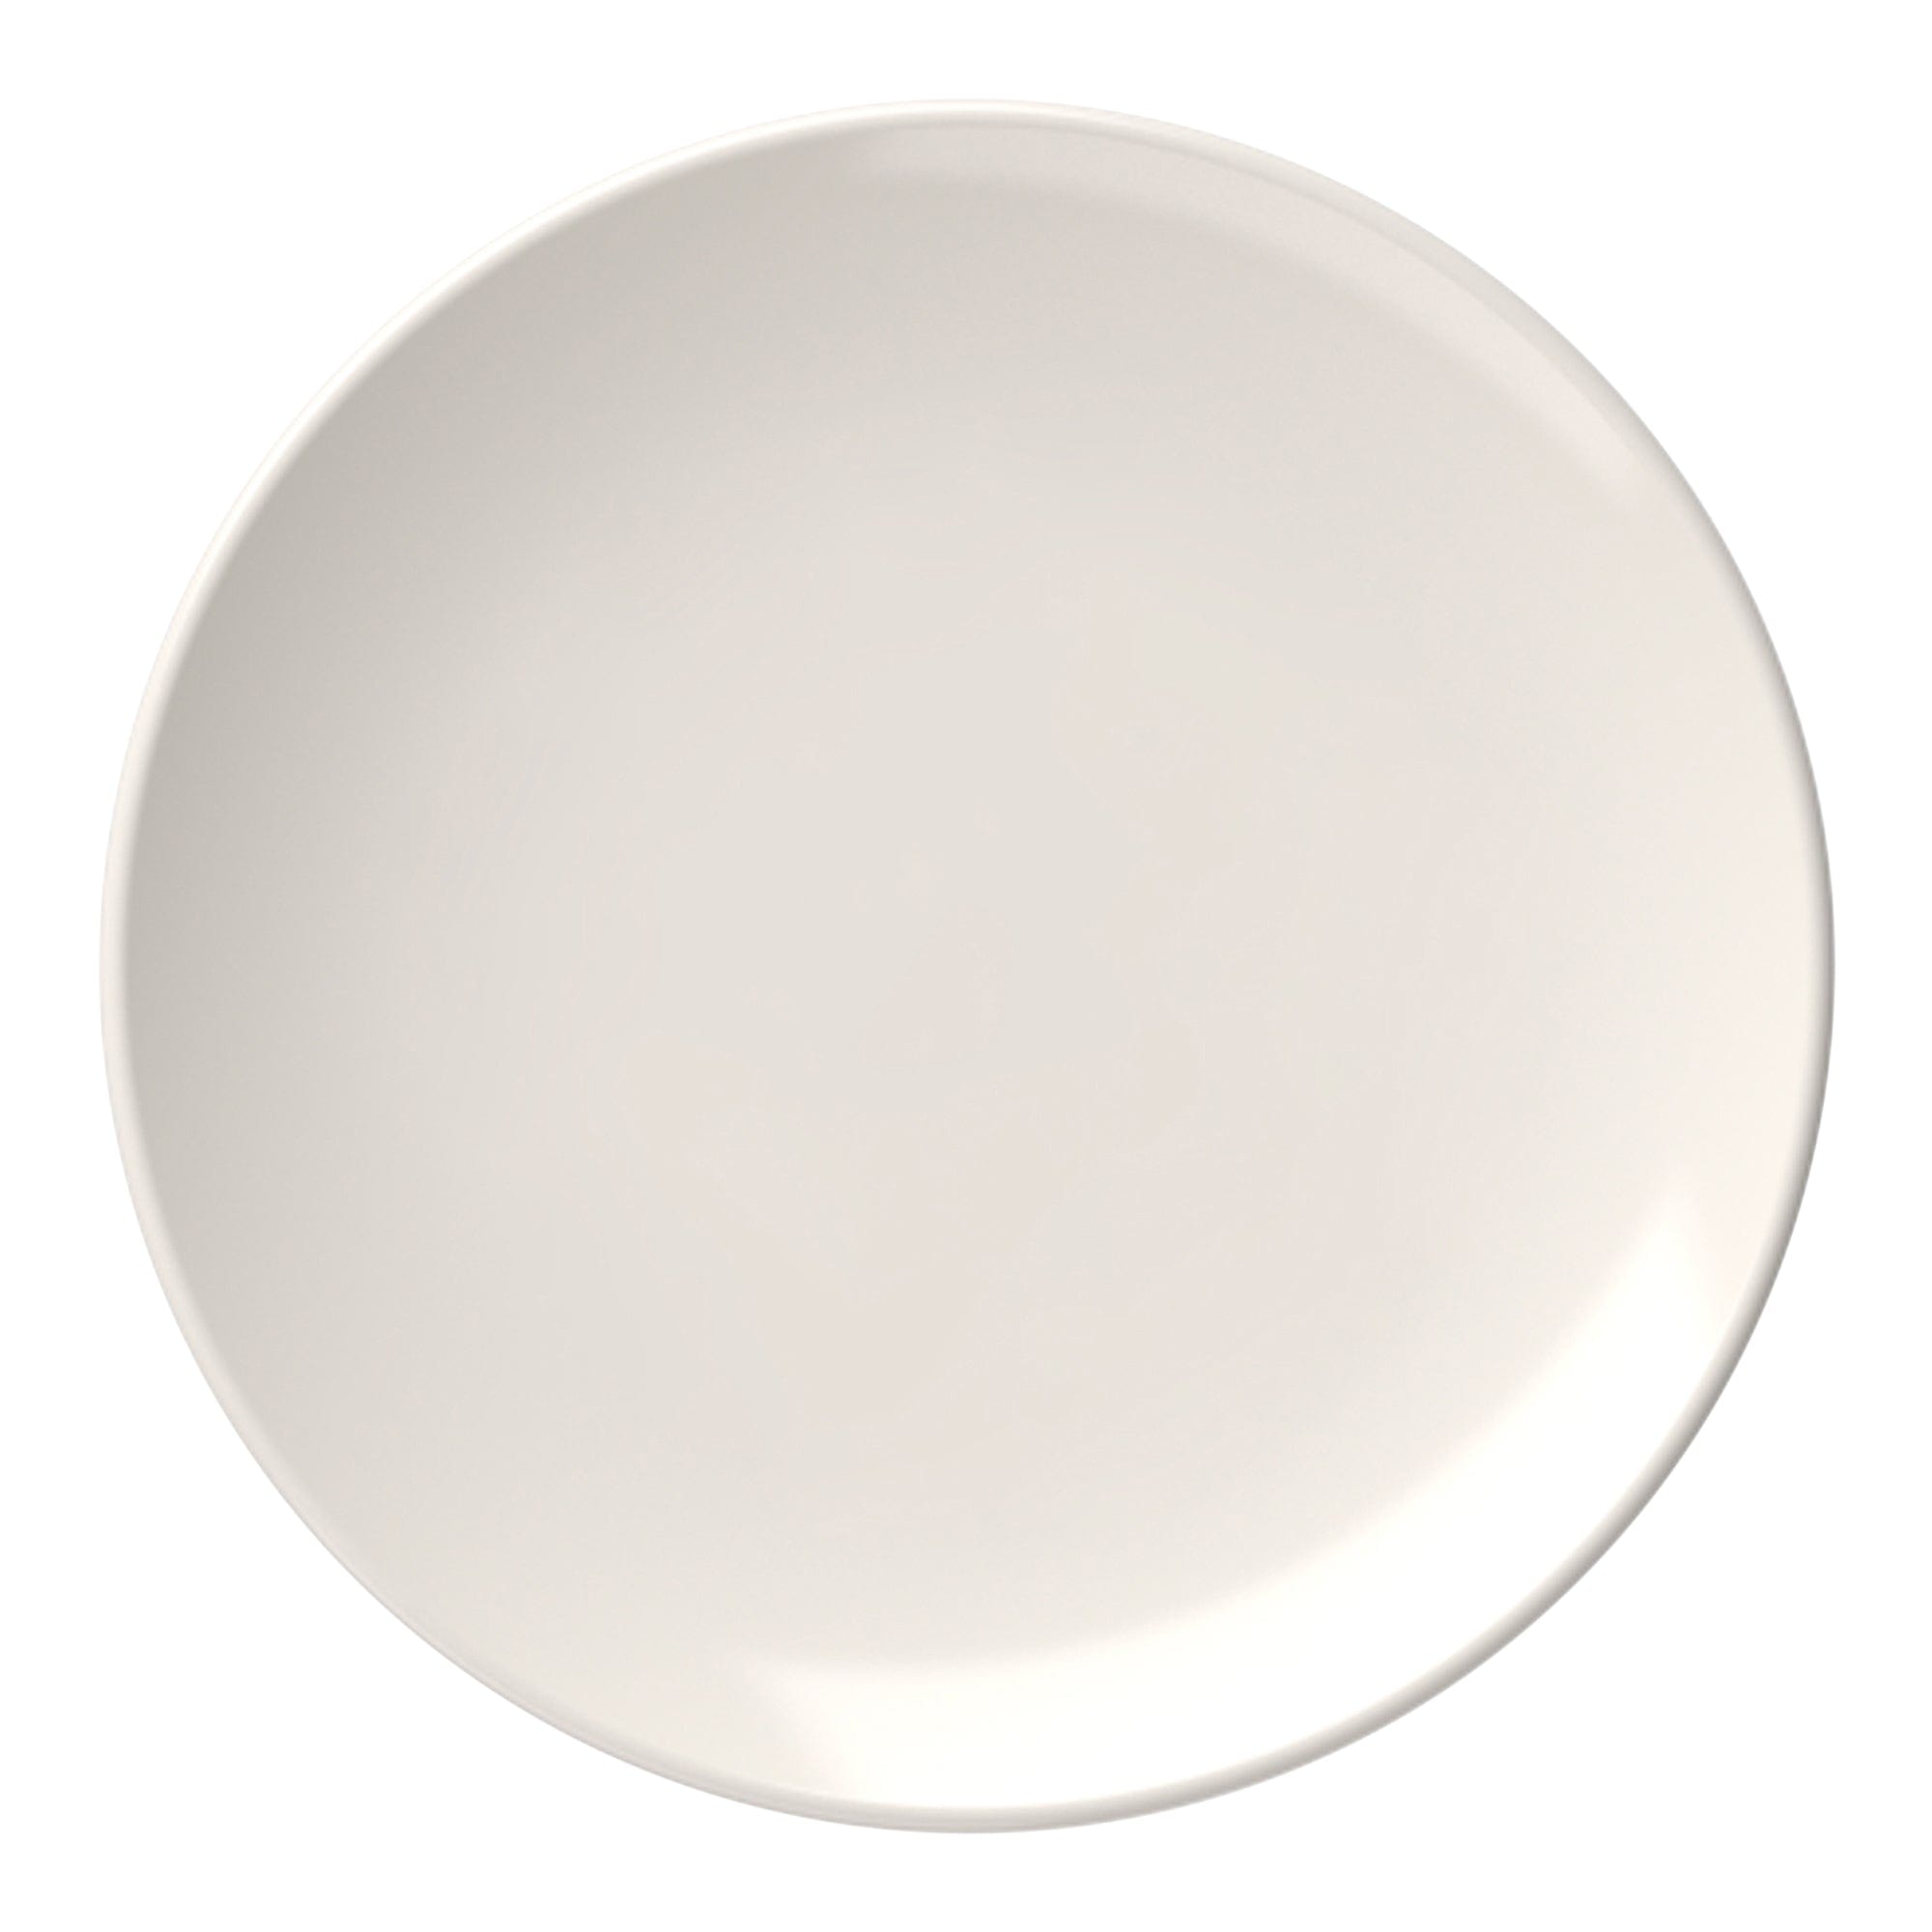 Lona Porcelain Plate 11.7"